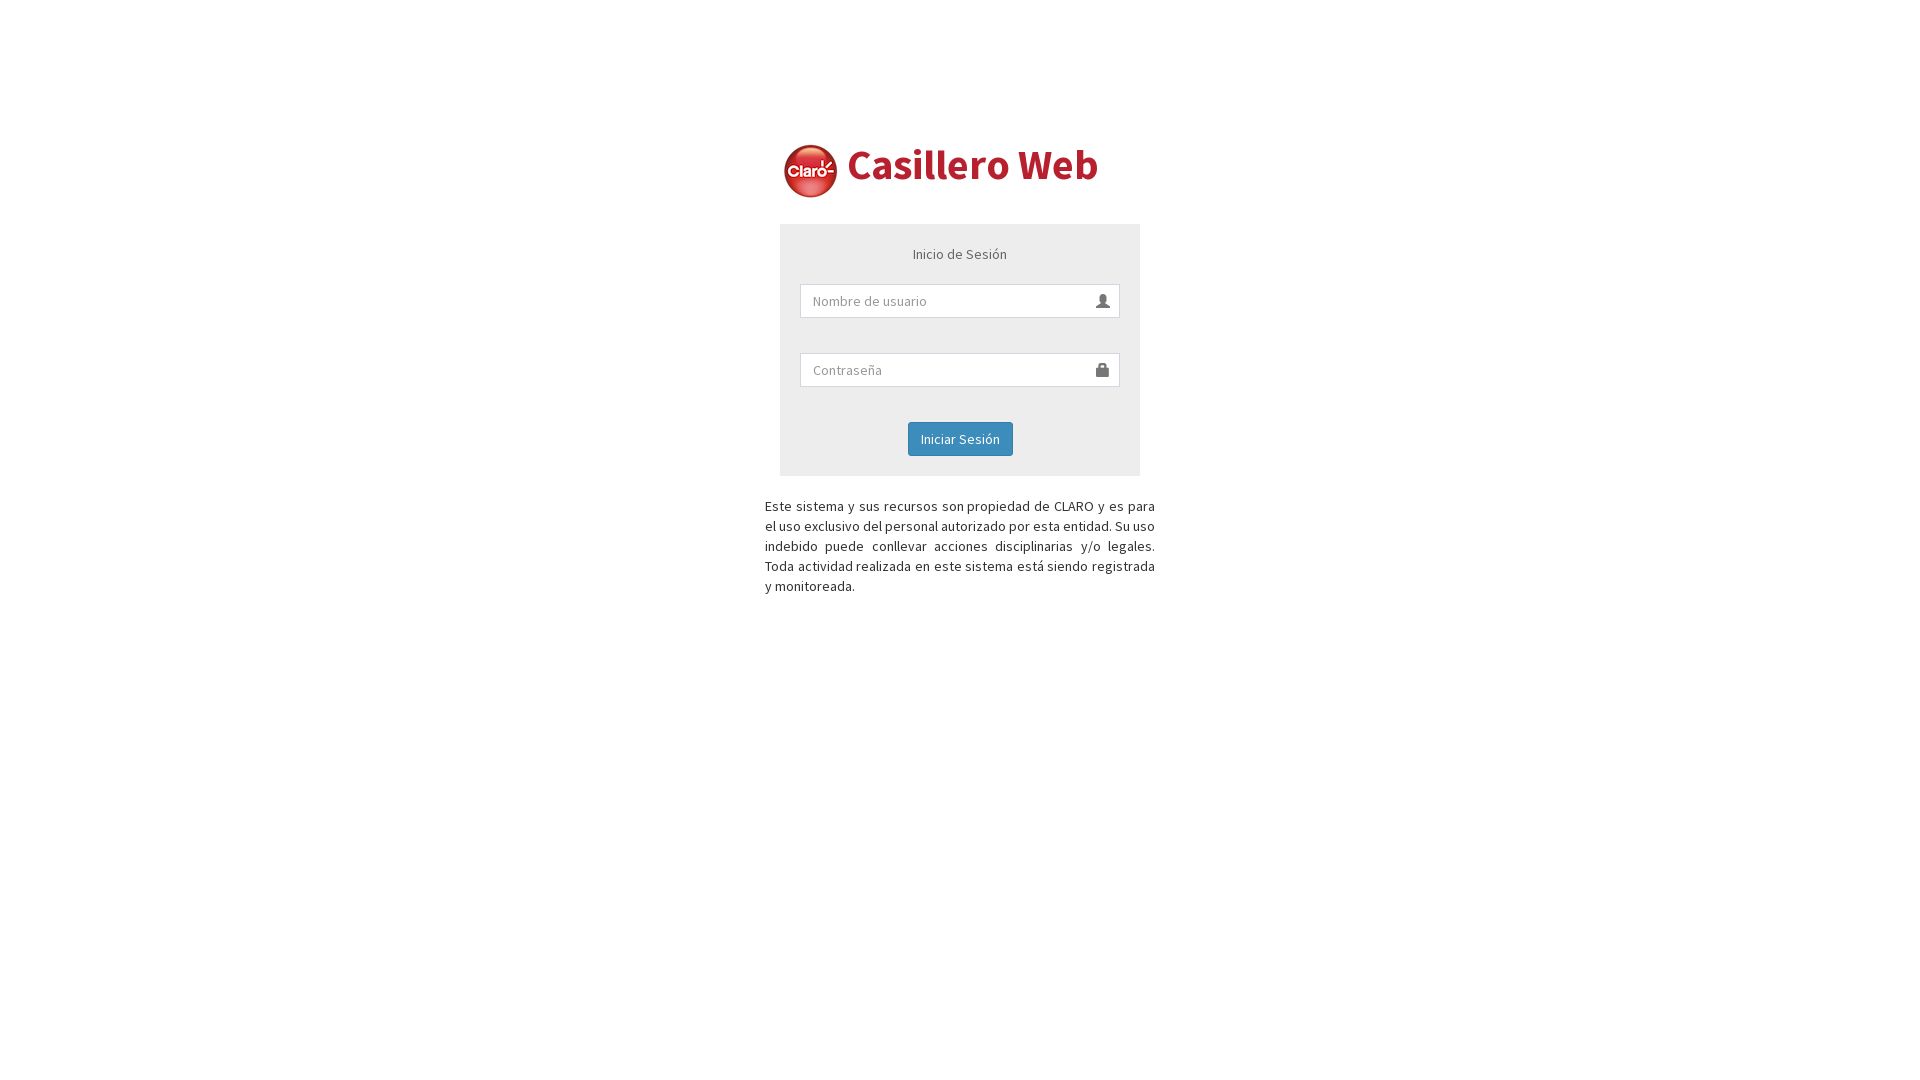 Website status sojcasillero.claro.com.do is   ONLINE